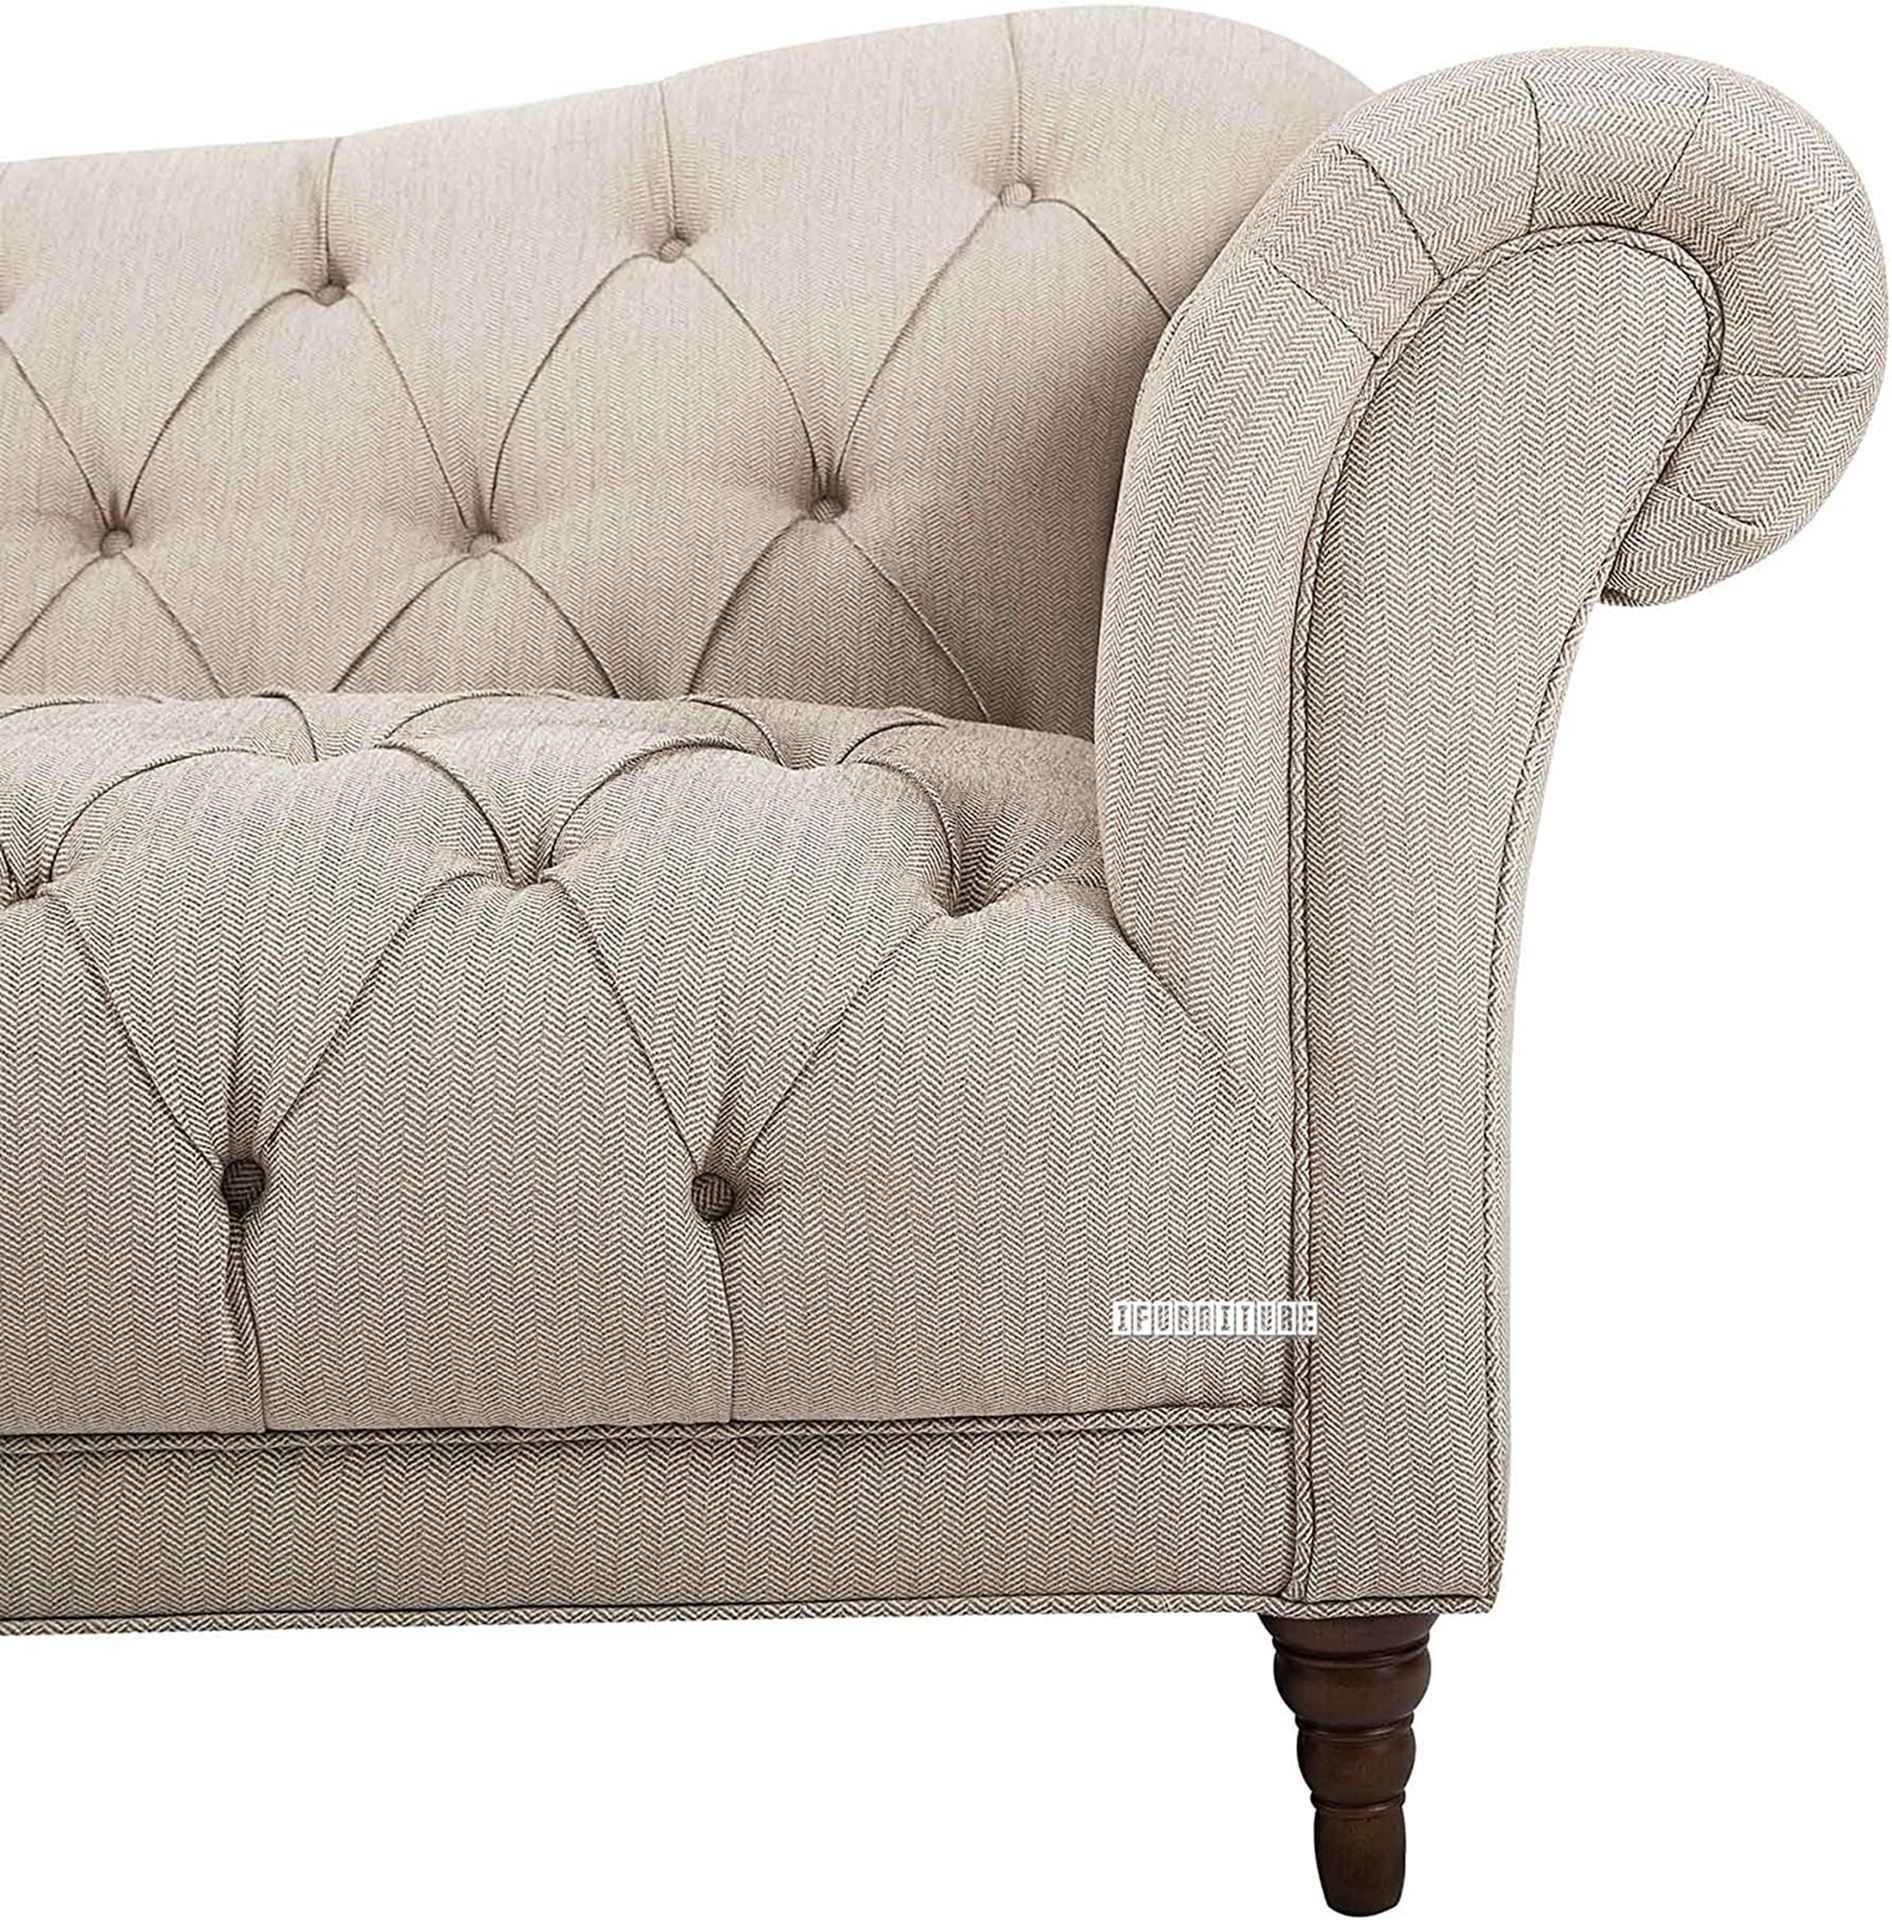 MARSALA 3+2+1 Chesterfield Tufted Fabric Sofa Range (Beige)